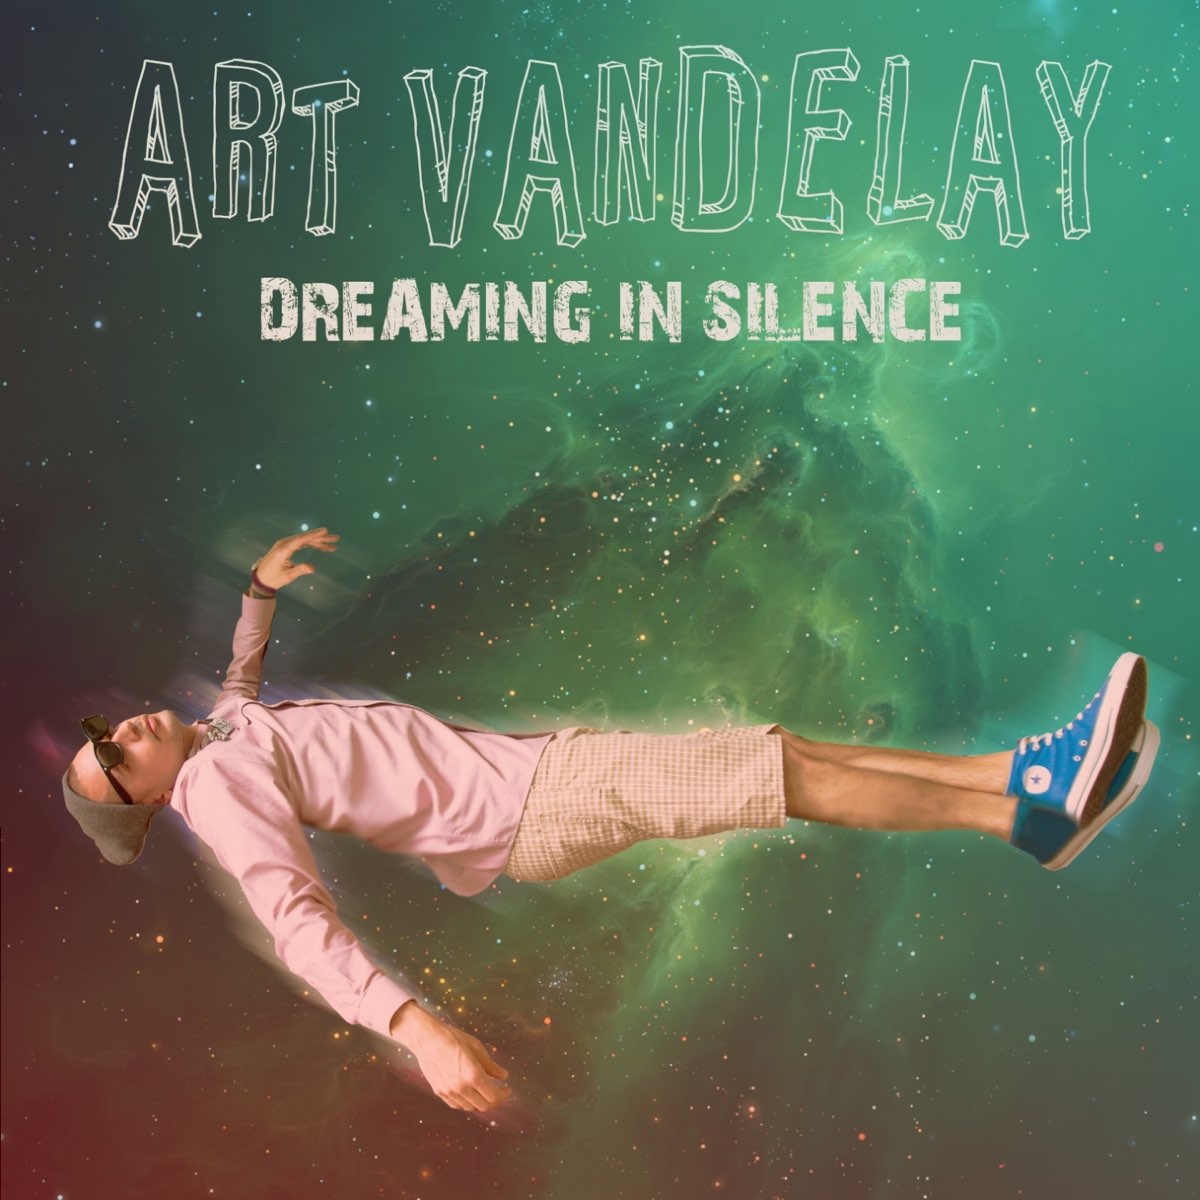 Включи dream on. In Silence Art. Art Vandelay. Dreaming. Музыка дримс альбомы.